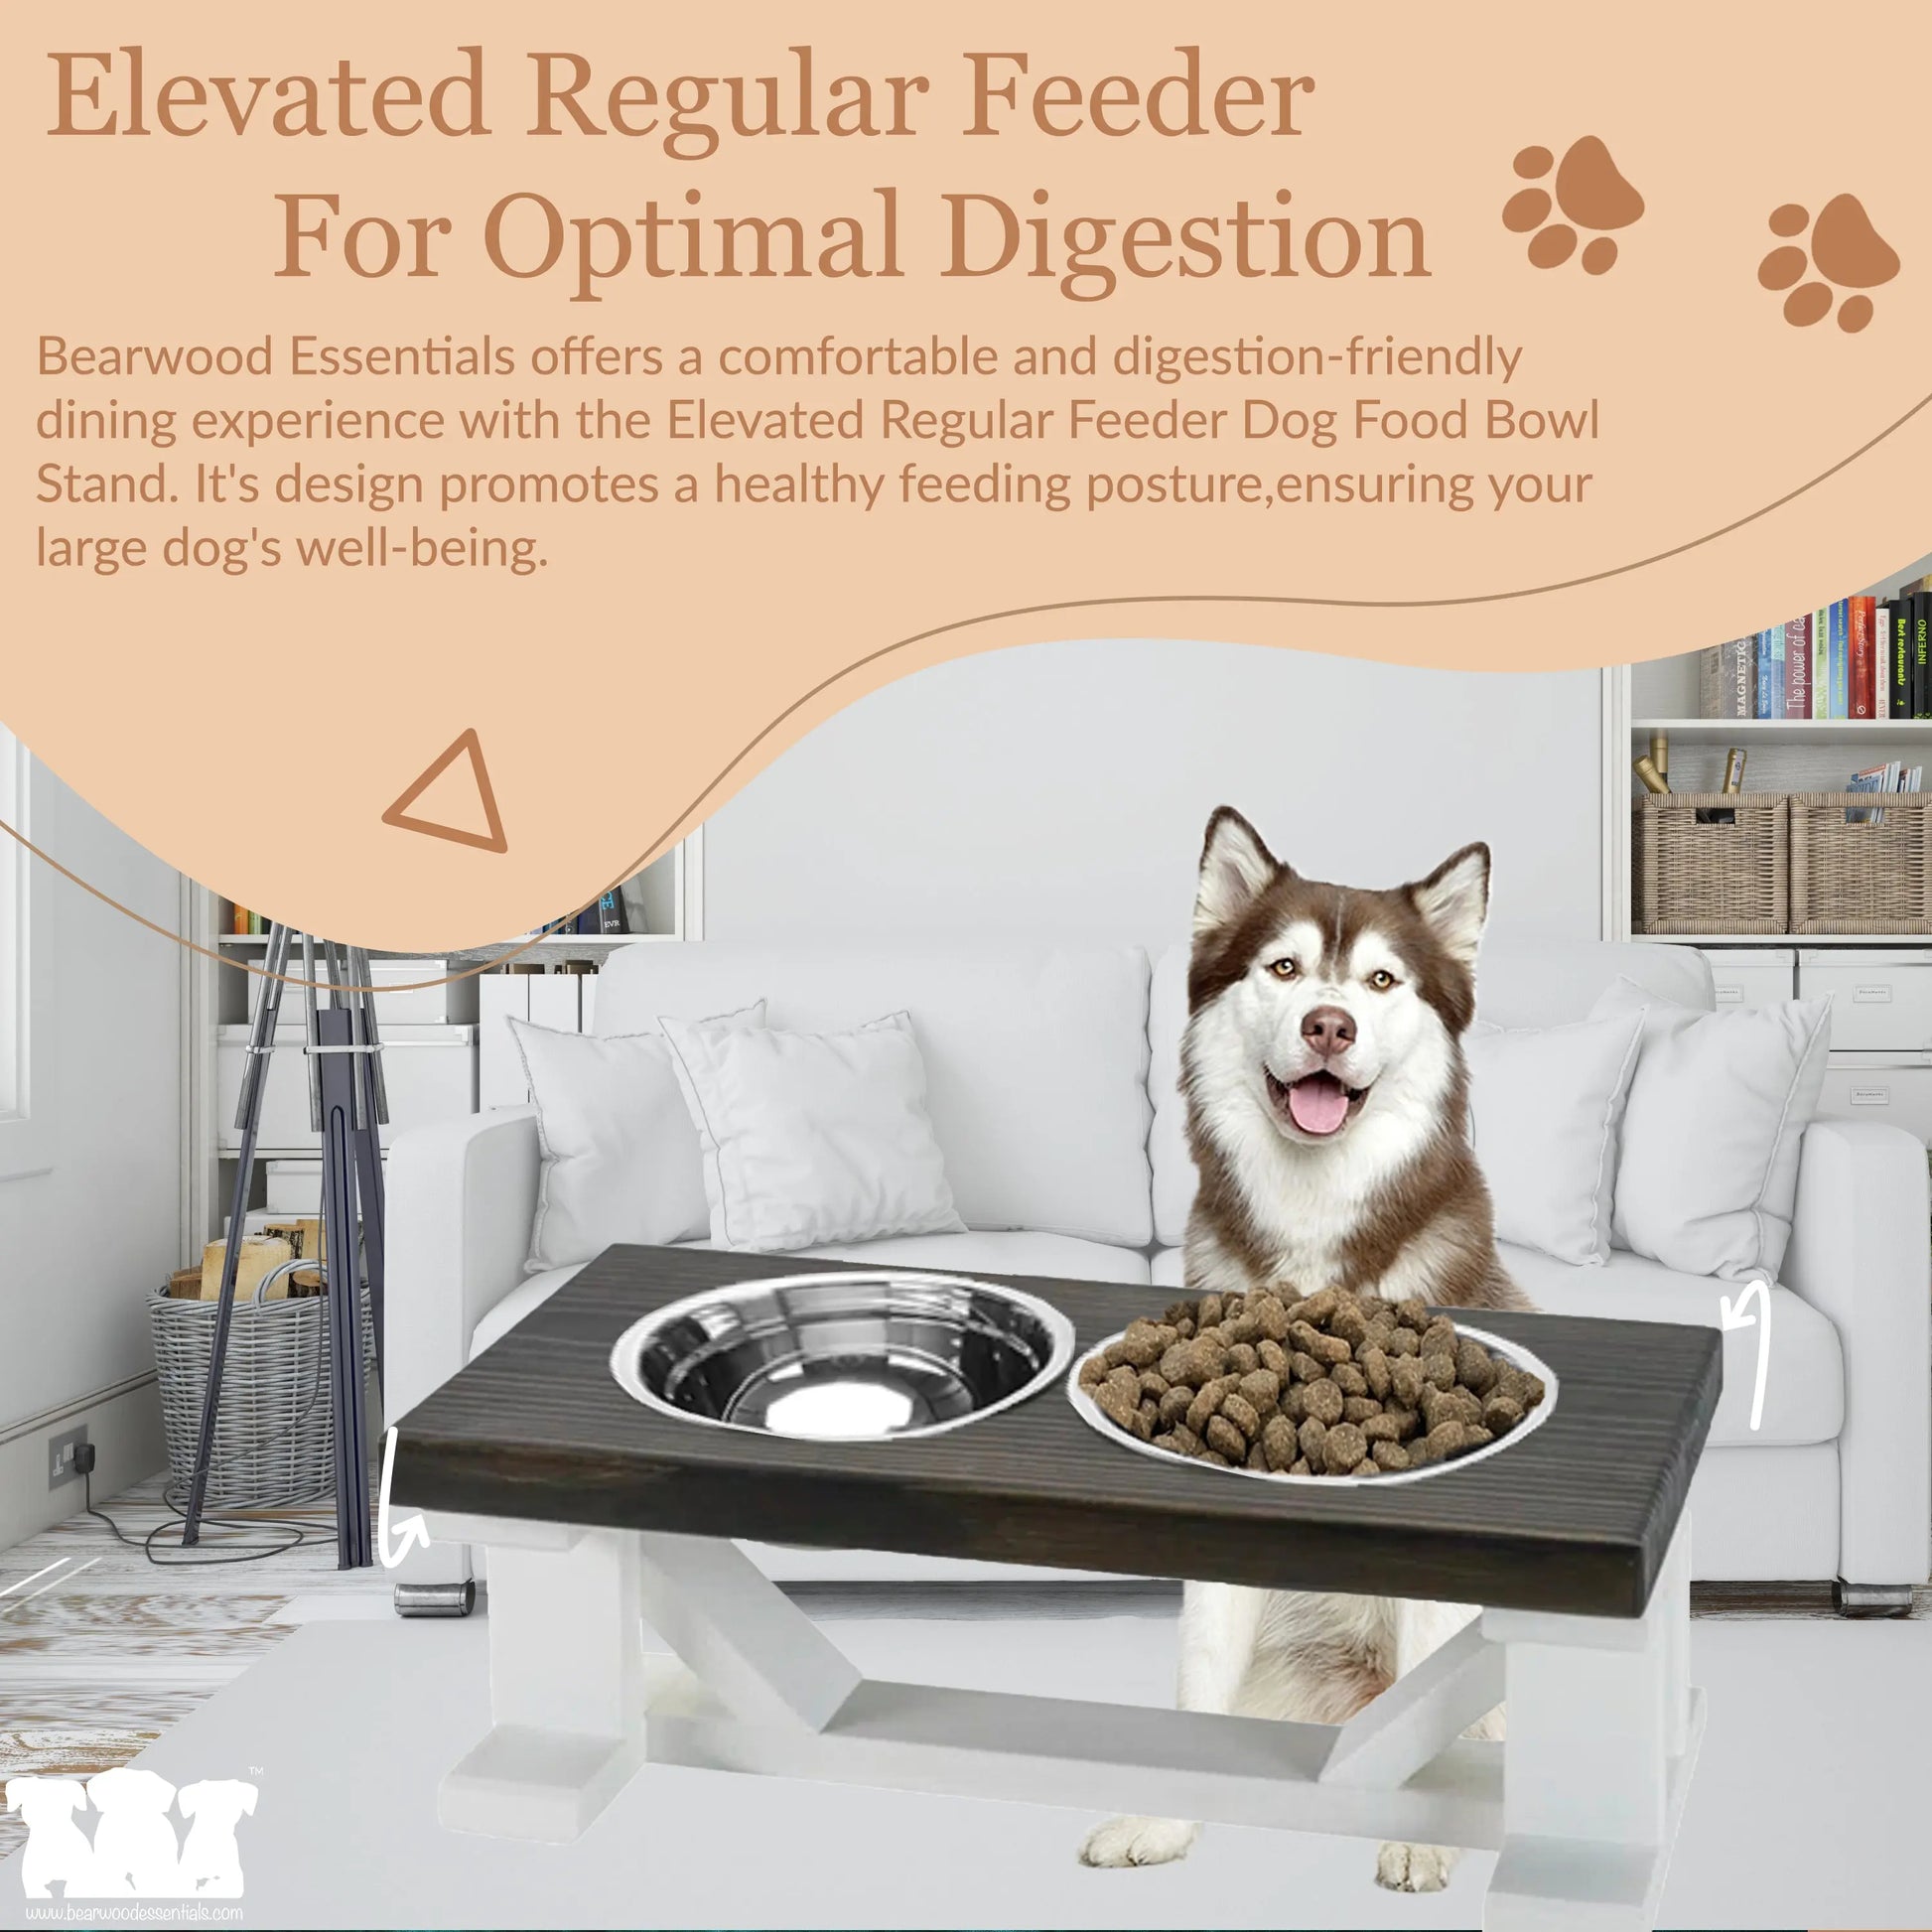 2 Bowl Elevated Dog Stand - Best Raised Dog Feeder